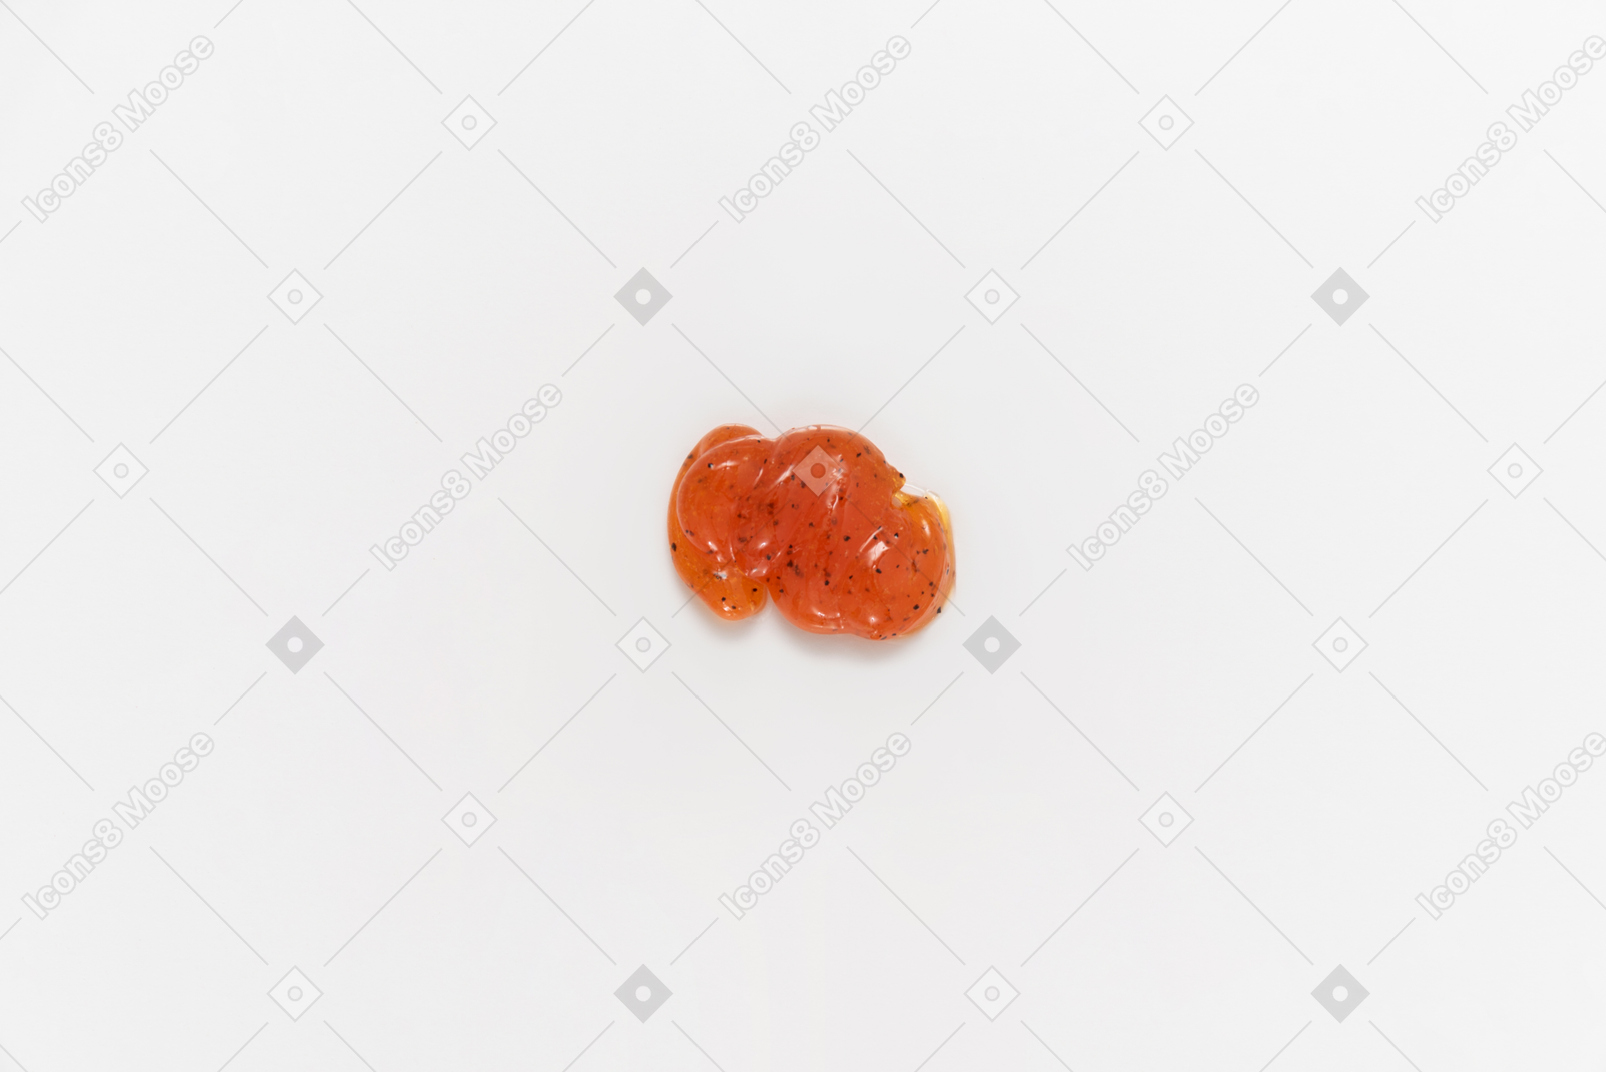 Drop of orange texture on white background